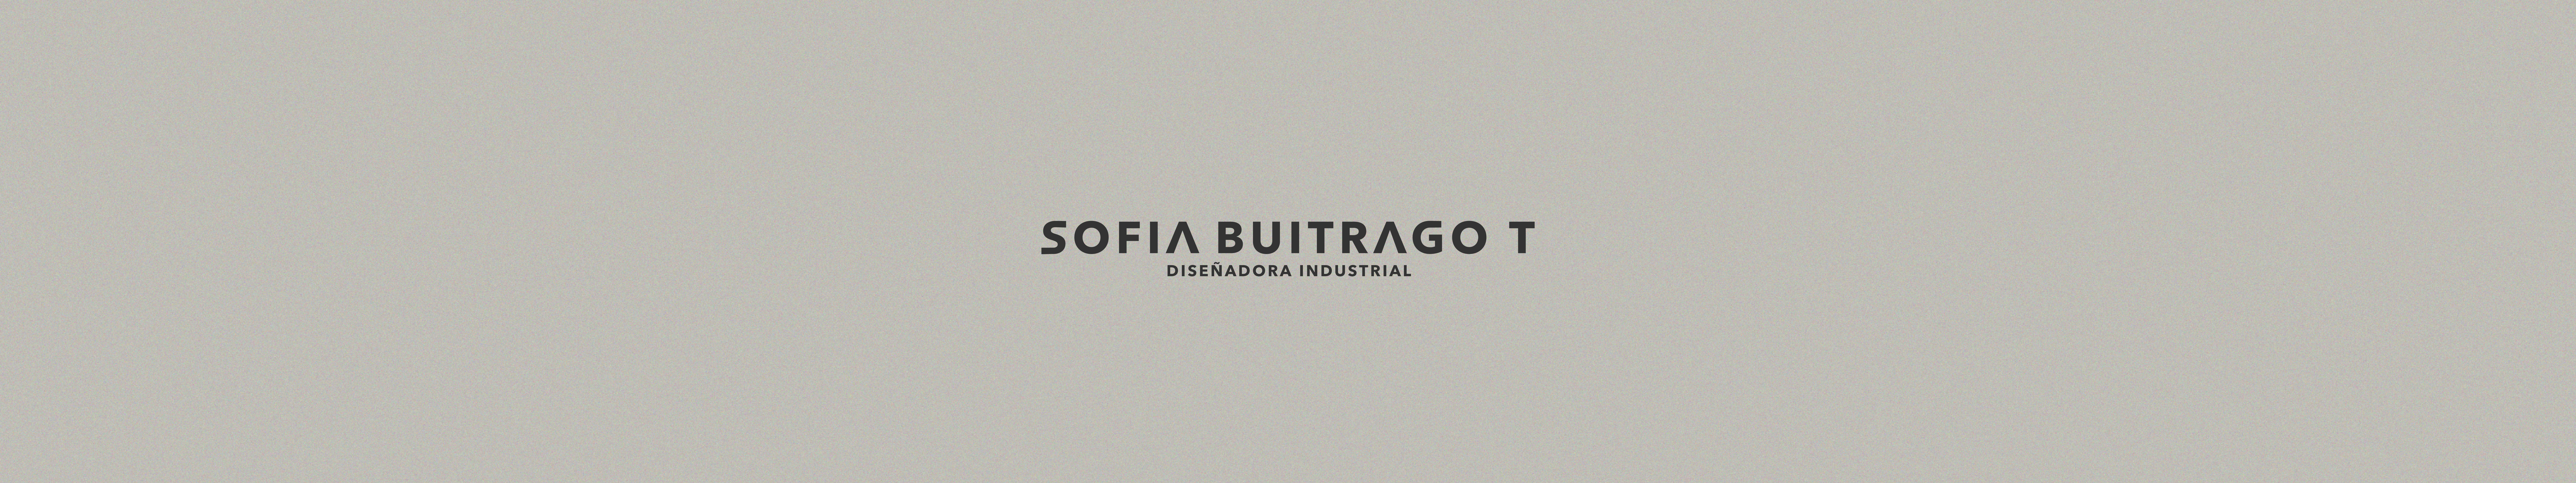 Sofia Buitrago Tapias のプロファイルバナー